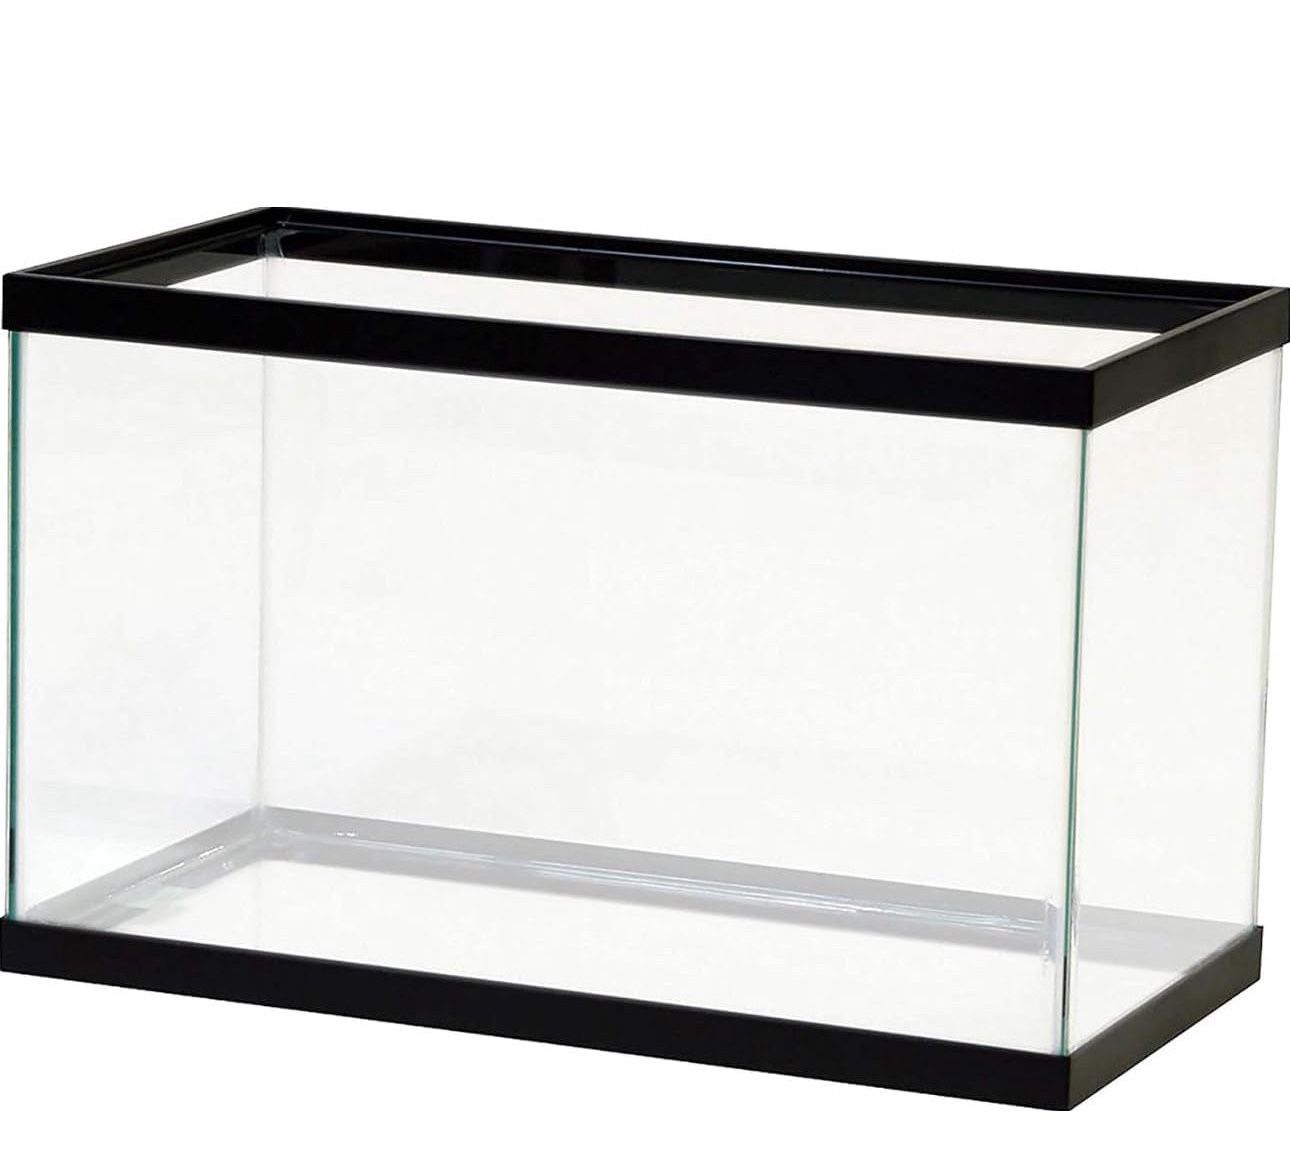 Standard Glass 10 Gallon Rectangular Tank for Aquariums & Terrariums with Black Trim Styling